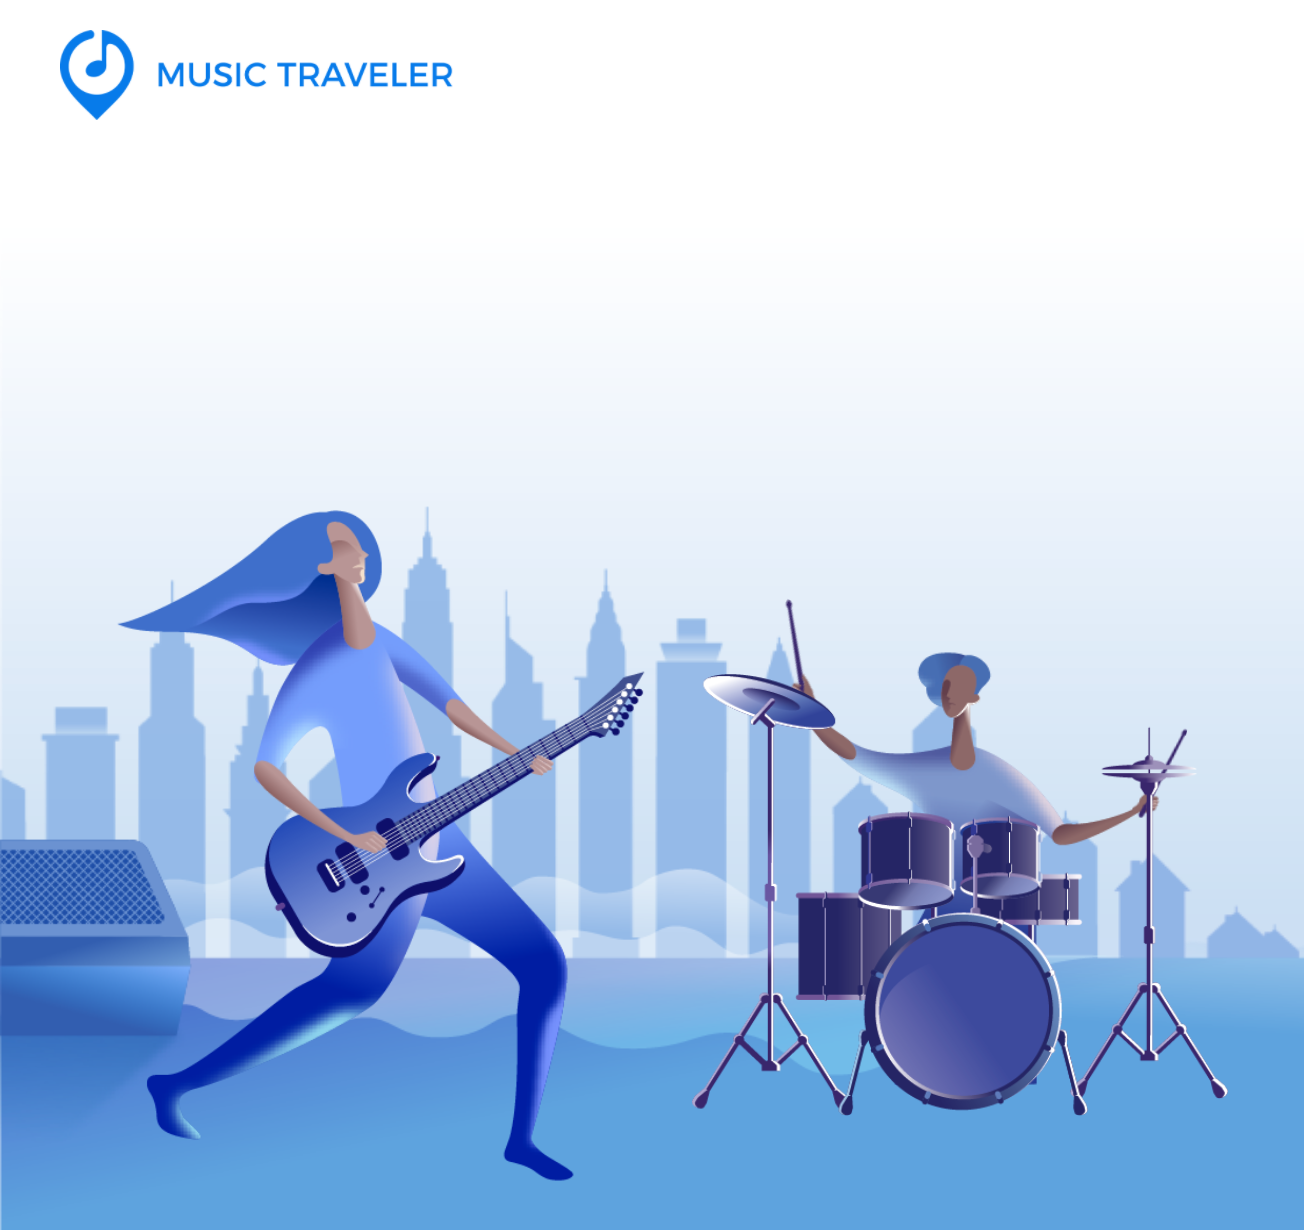 Music Traveler - Austrian Start-Up disrupts the World of Venue Booking